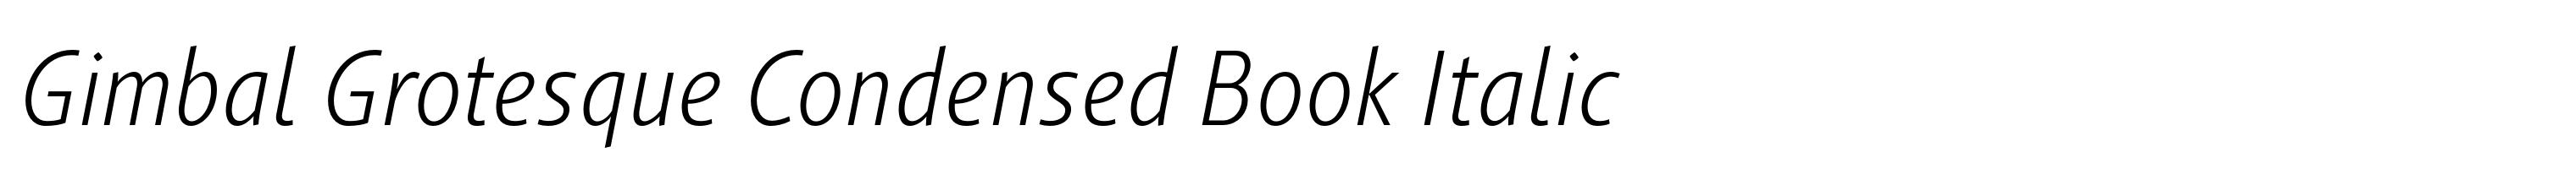 Gimbal Grotesque Condensed Book Italic